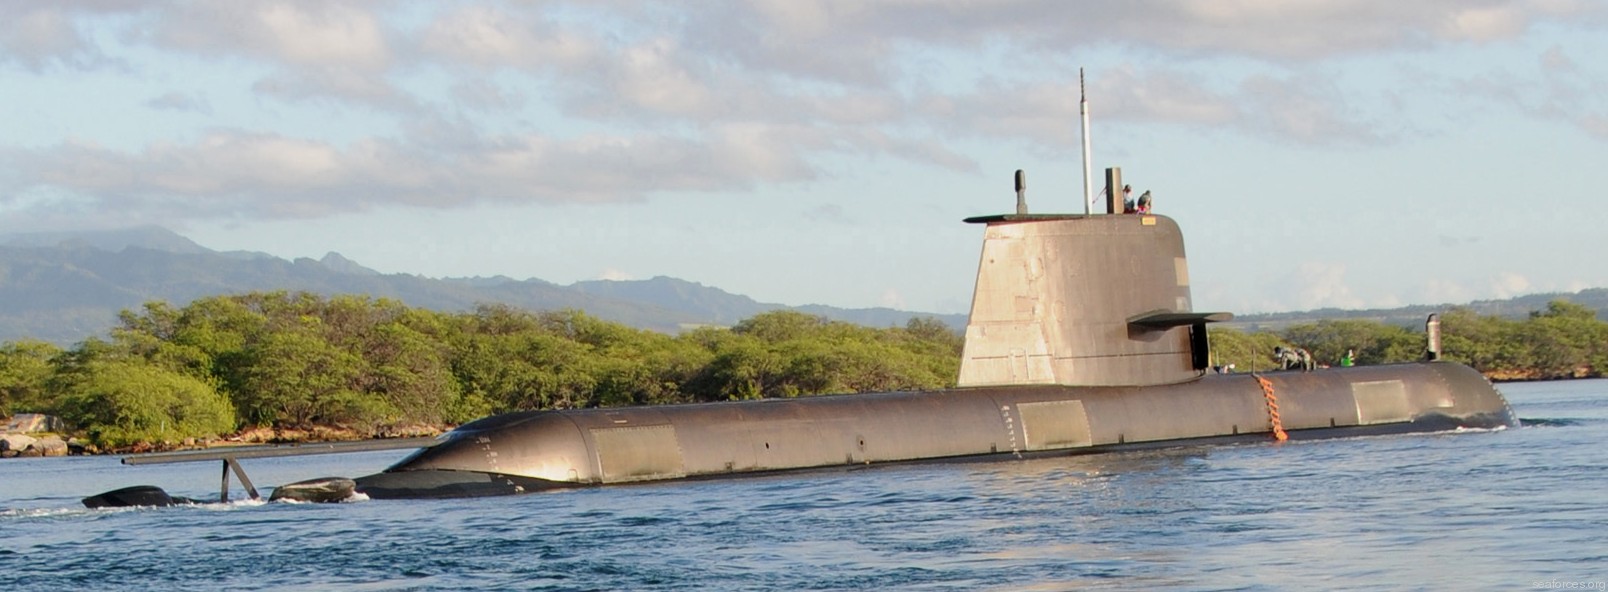 hmas sheean ssg-77 collins class attack submarine ssk royal australian navy 16